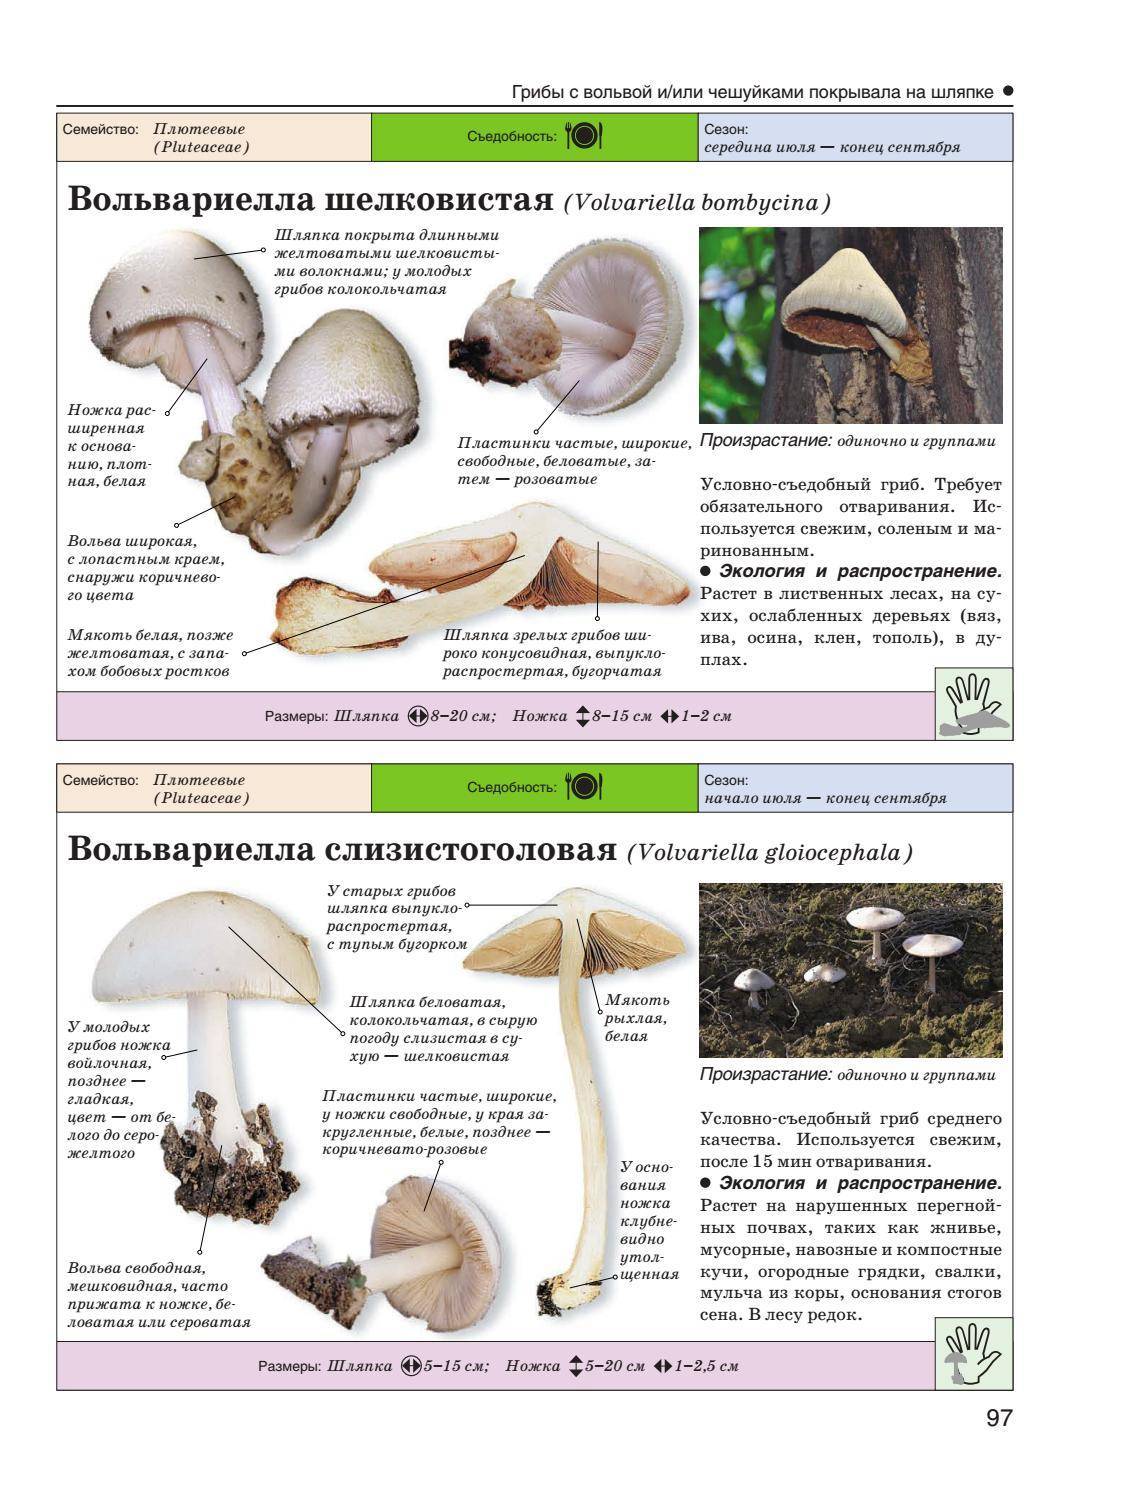 Гриб вольвариелла шелковистая (volvariella bombycina): описание, фото